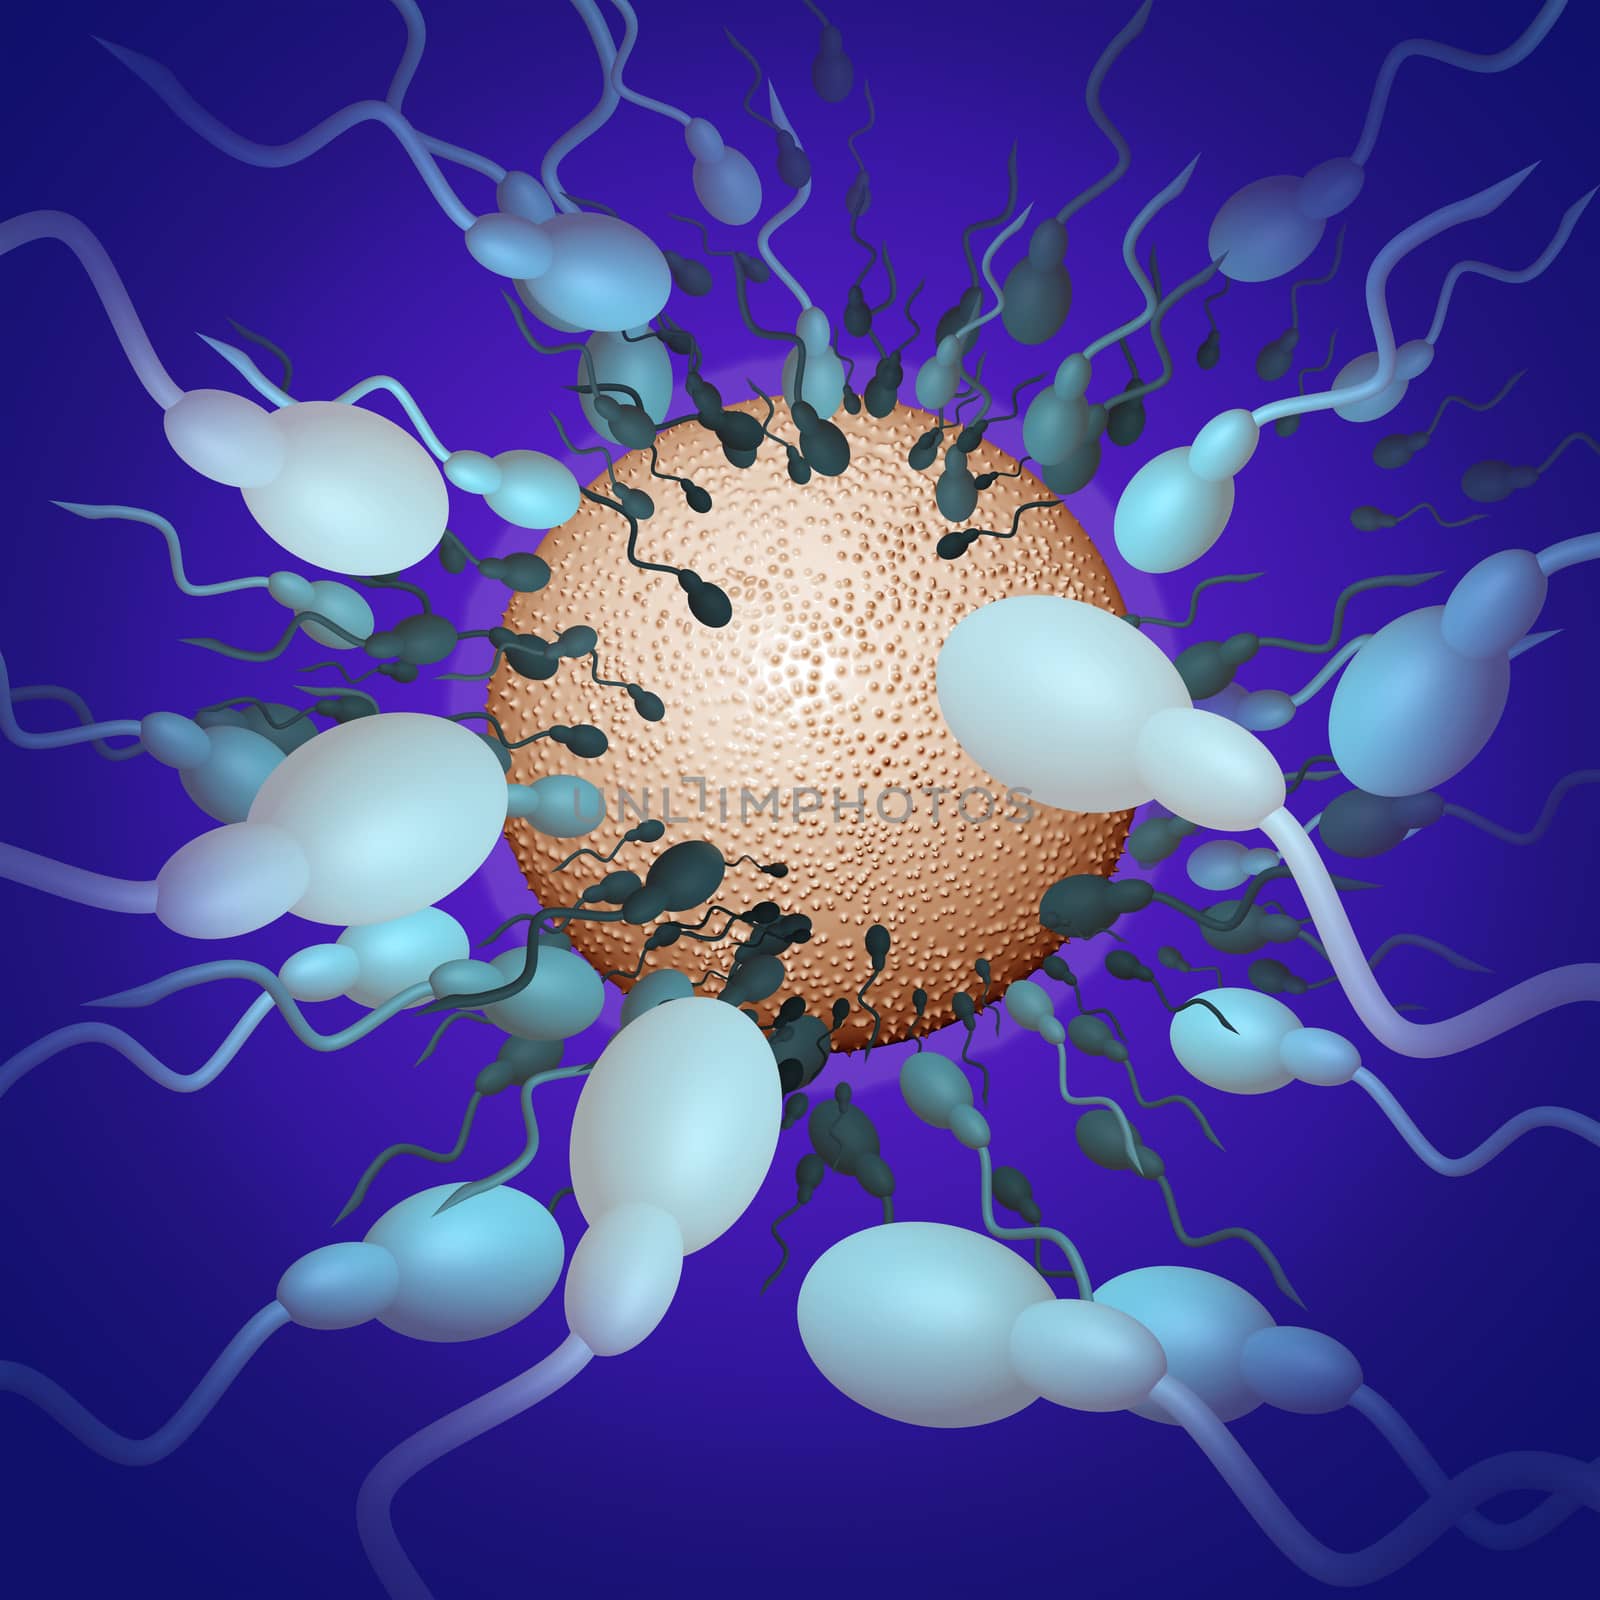 sperms heading towards egg by vitanovski